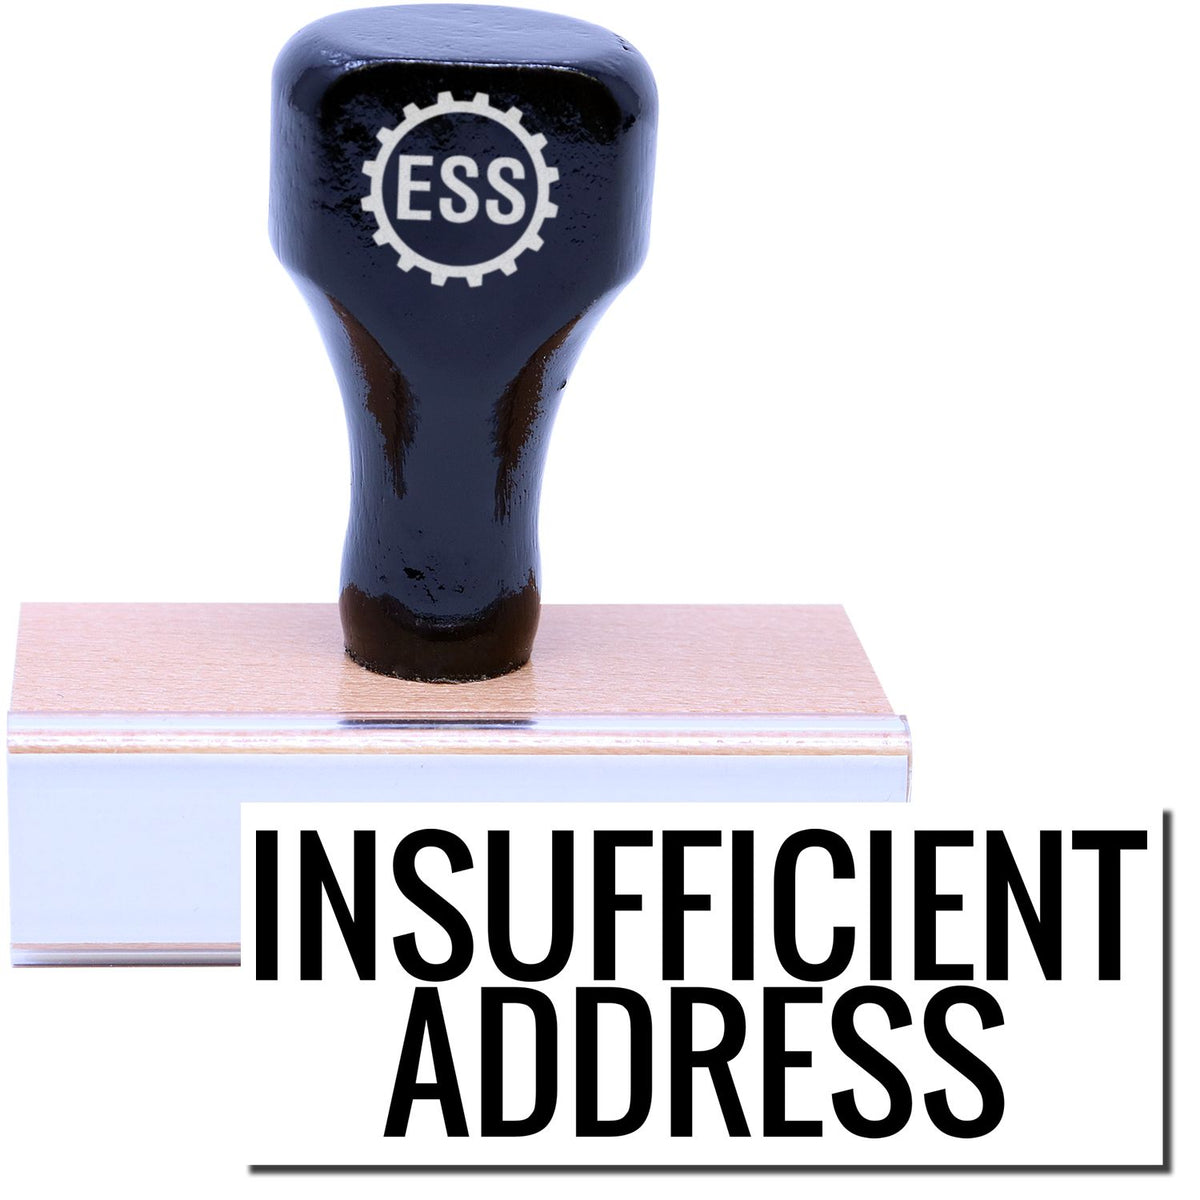 Insufficient Address Rubber Stamp